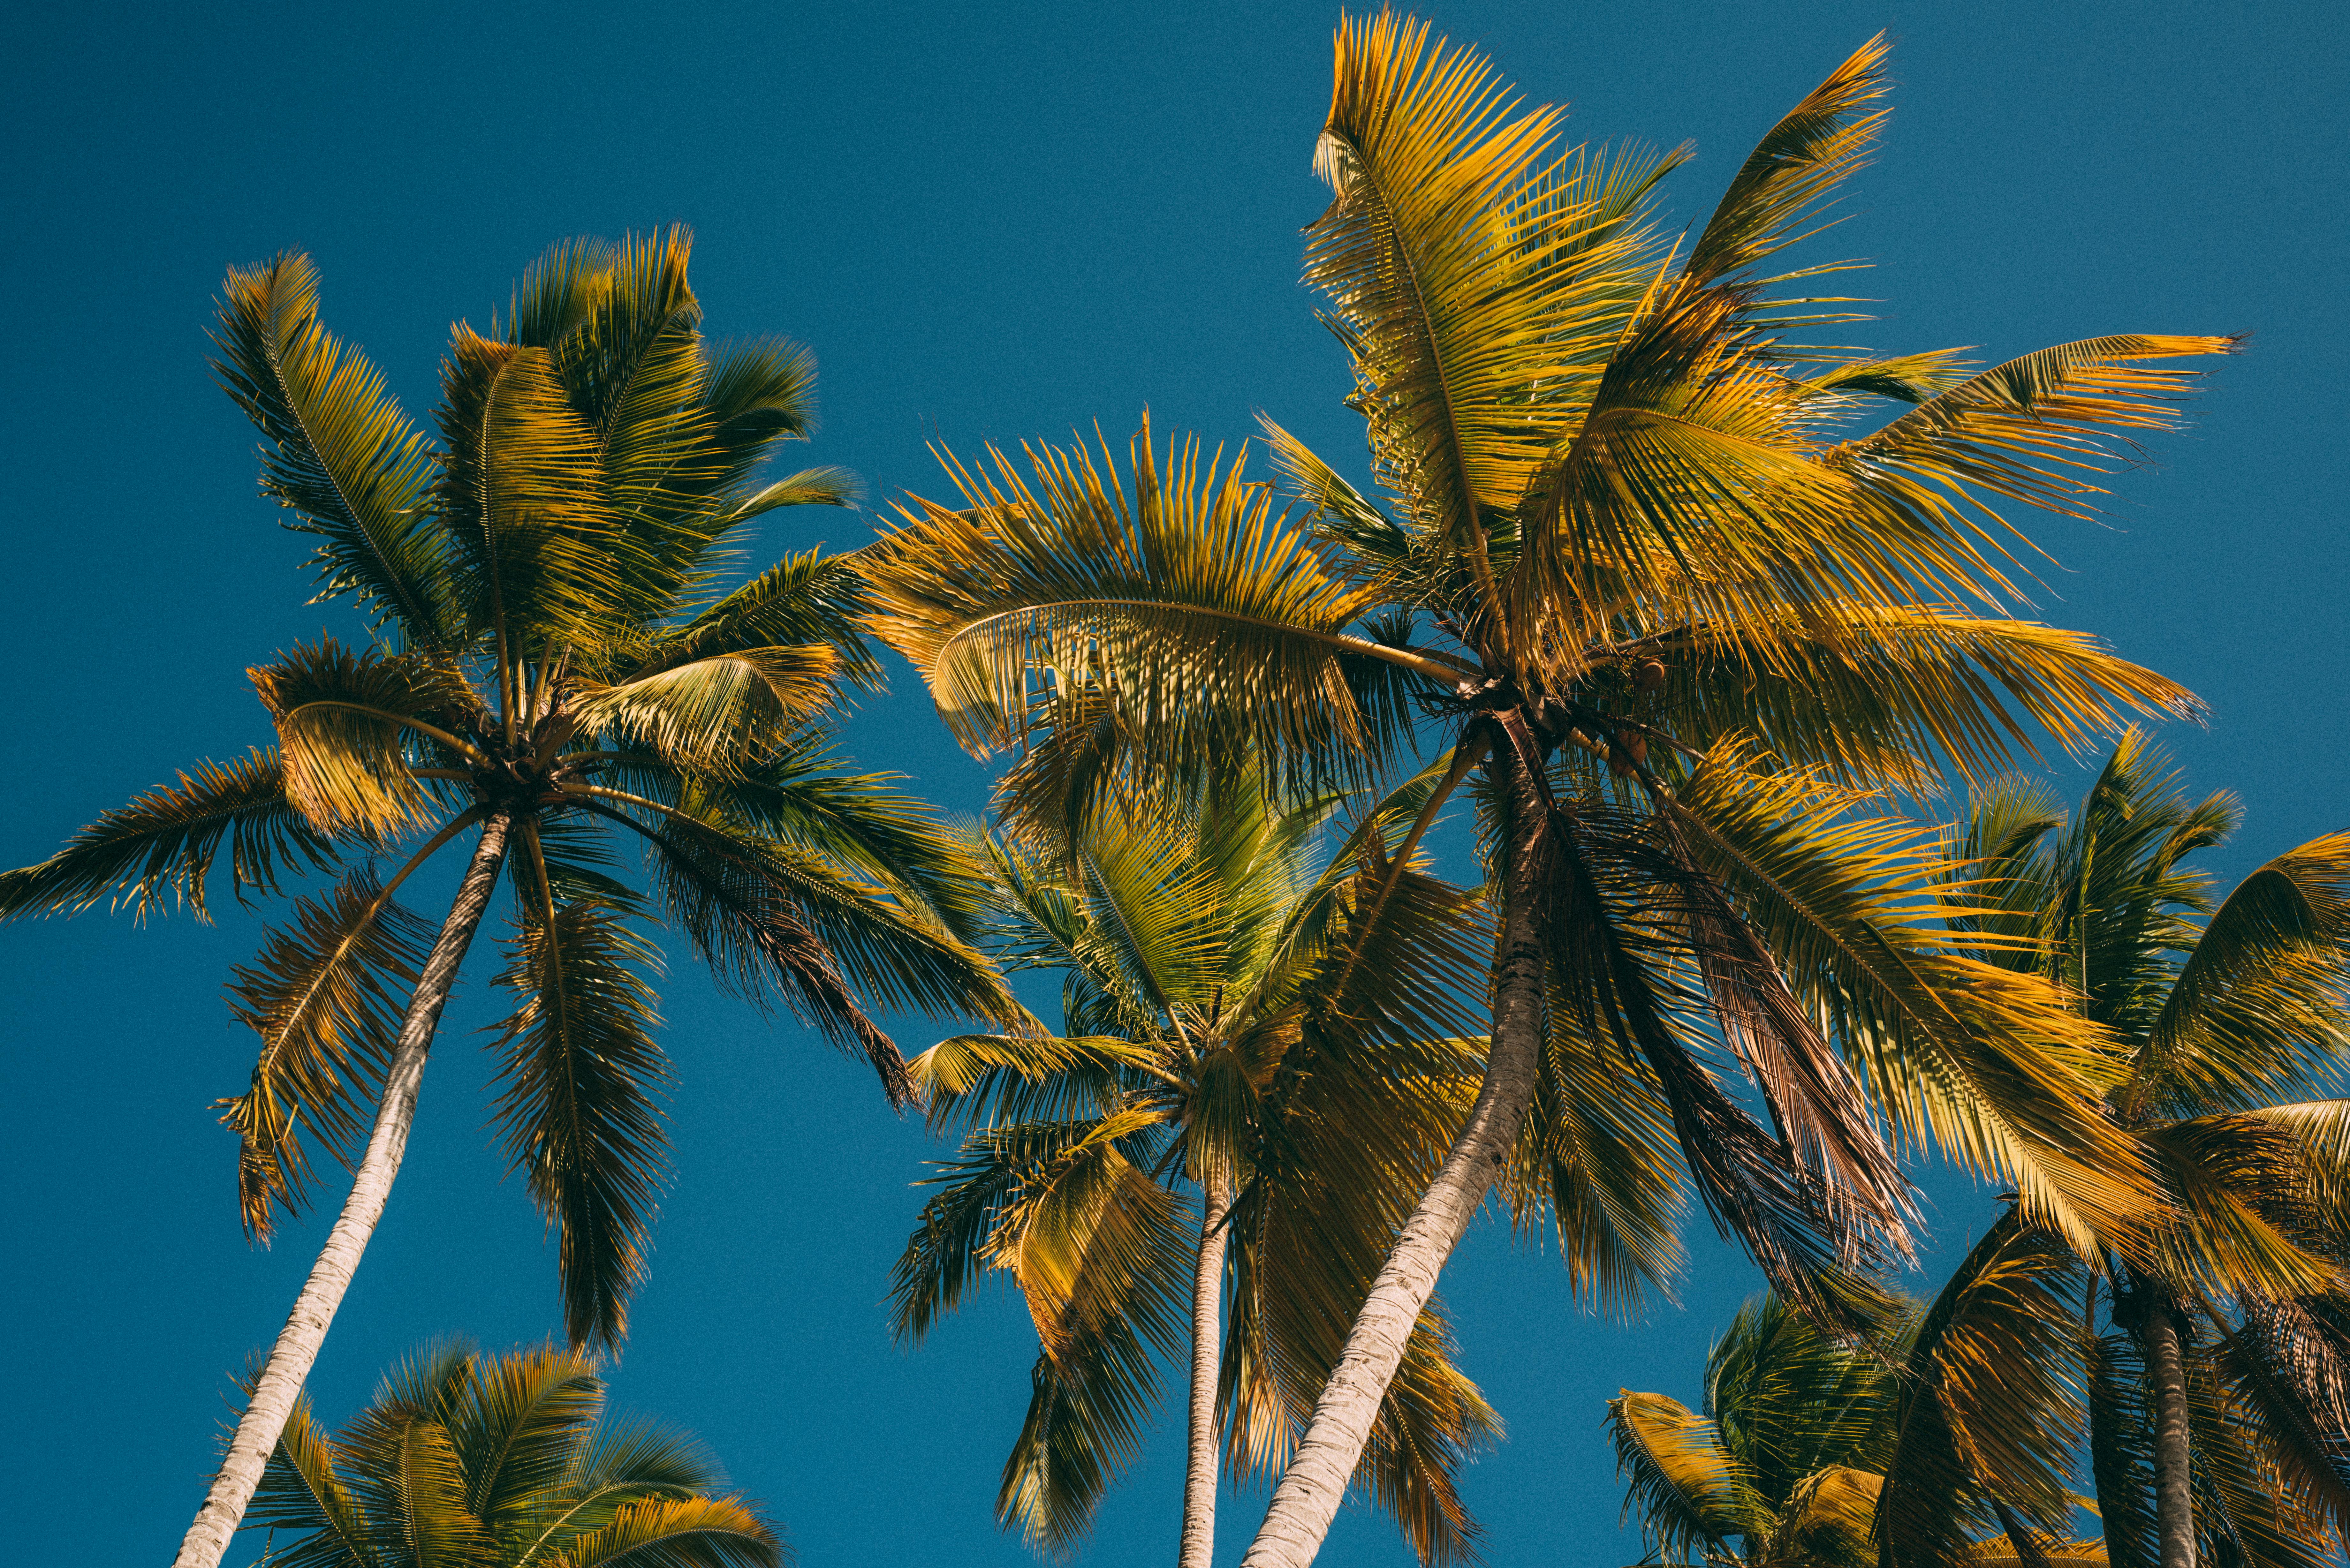 Green Coconut Tree Under Blue Sky · Free Stock Photo